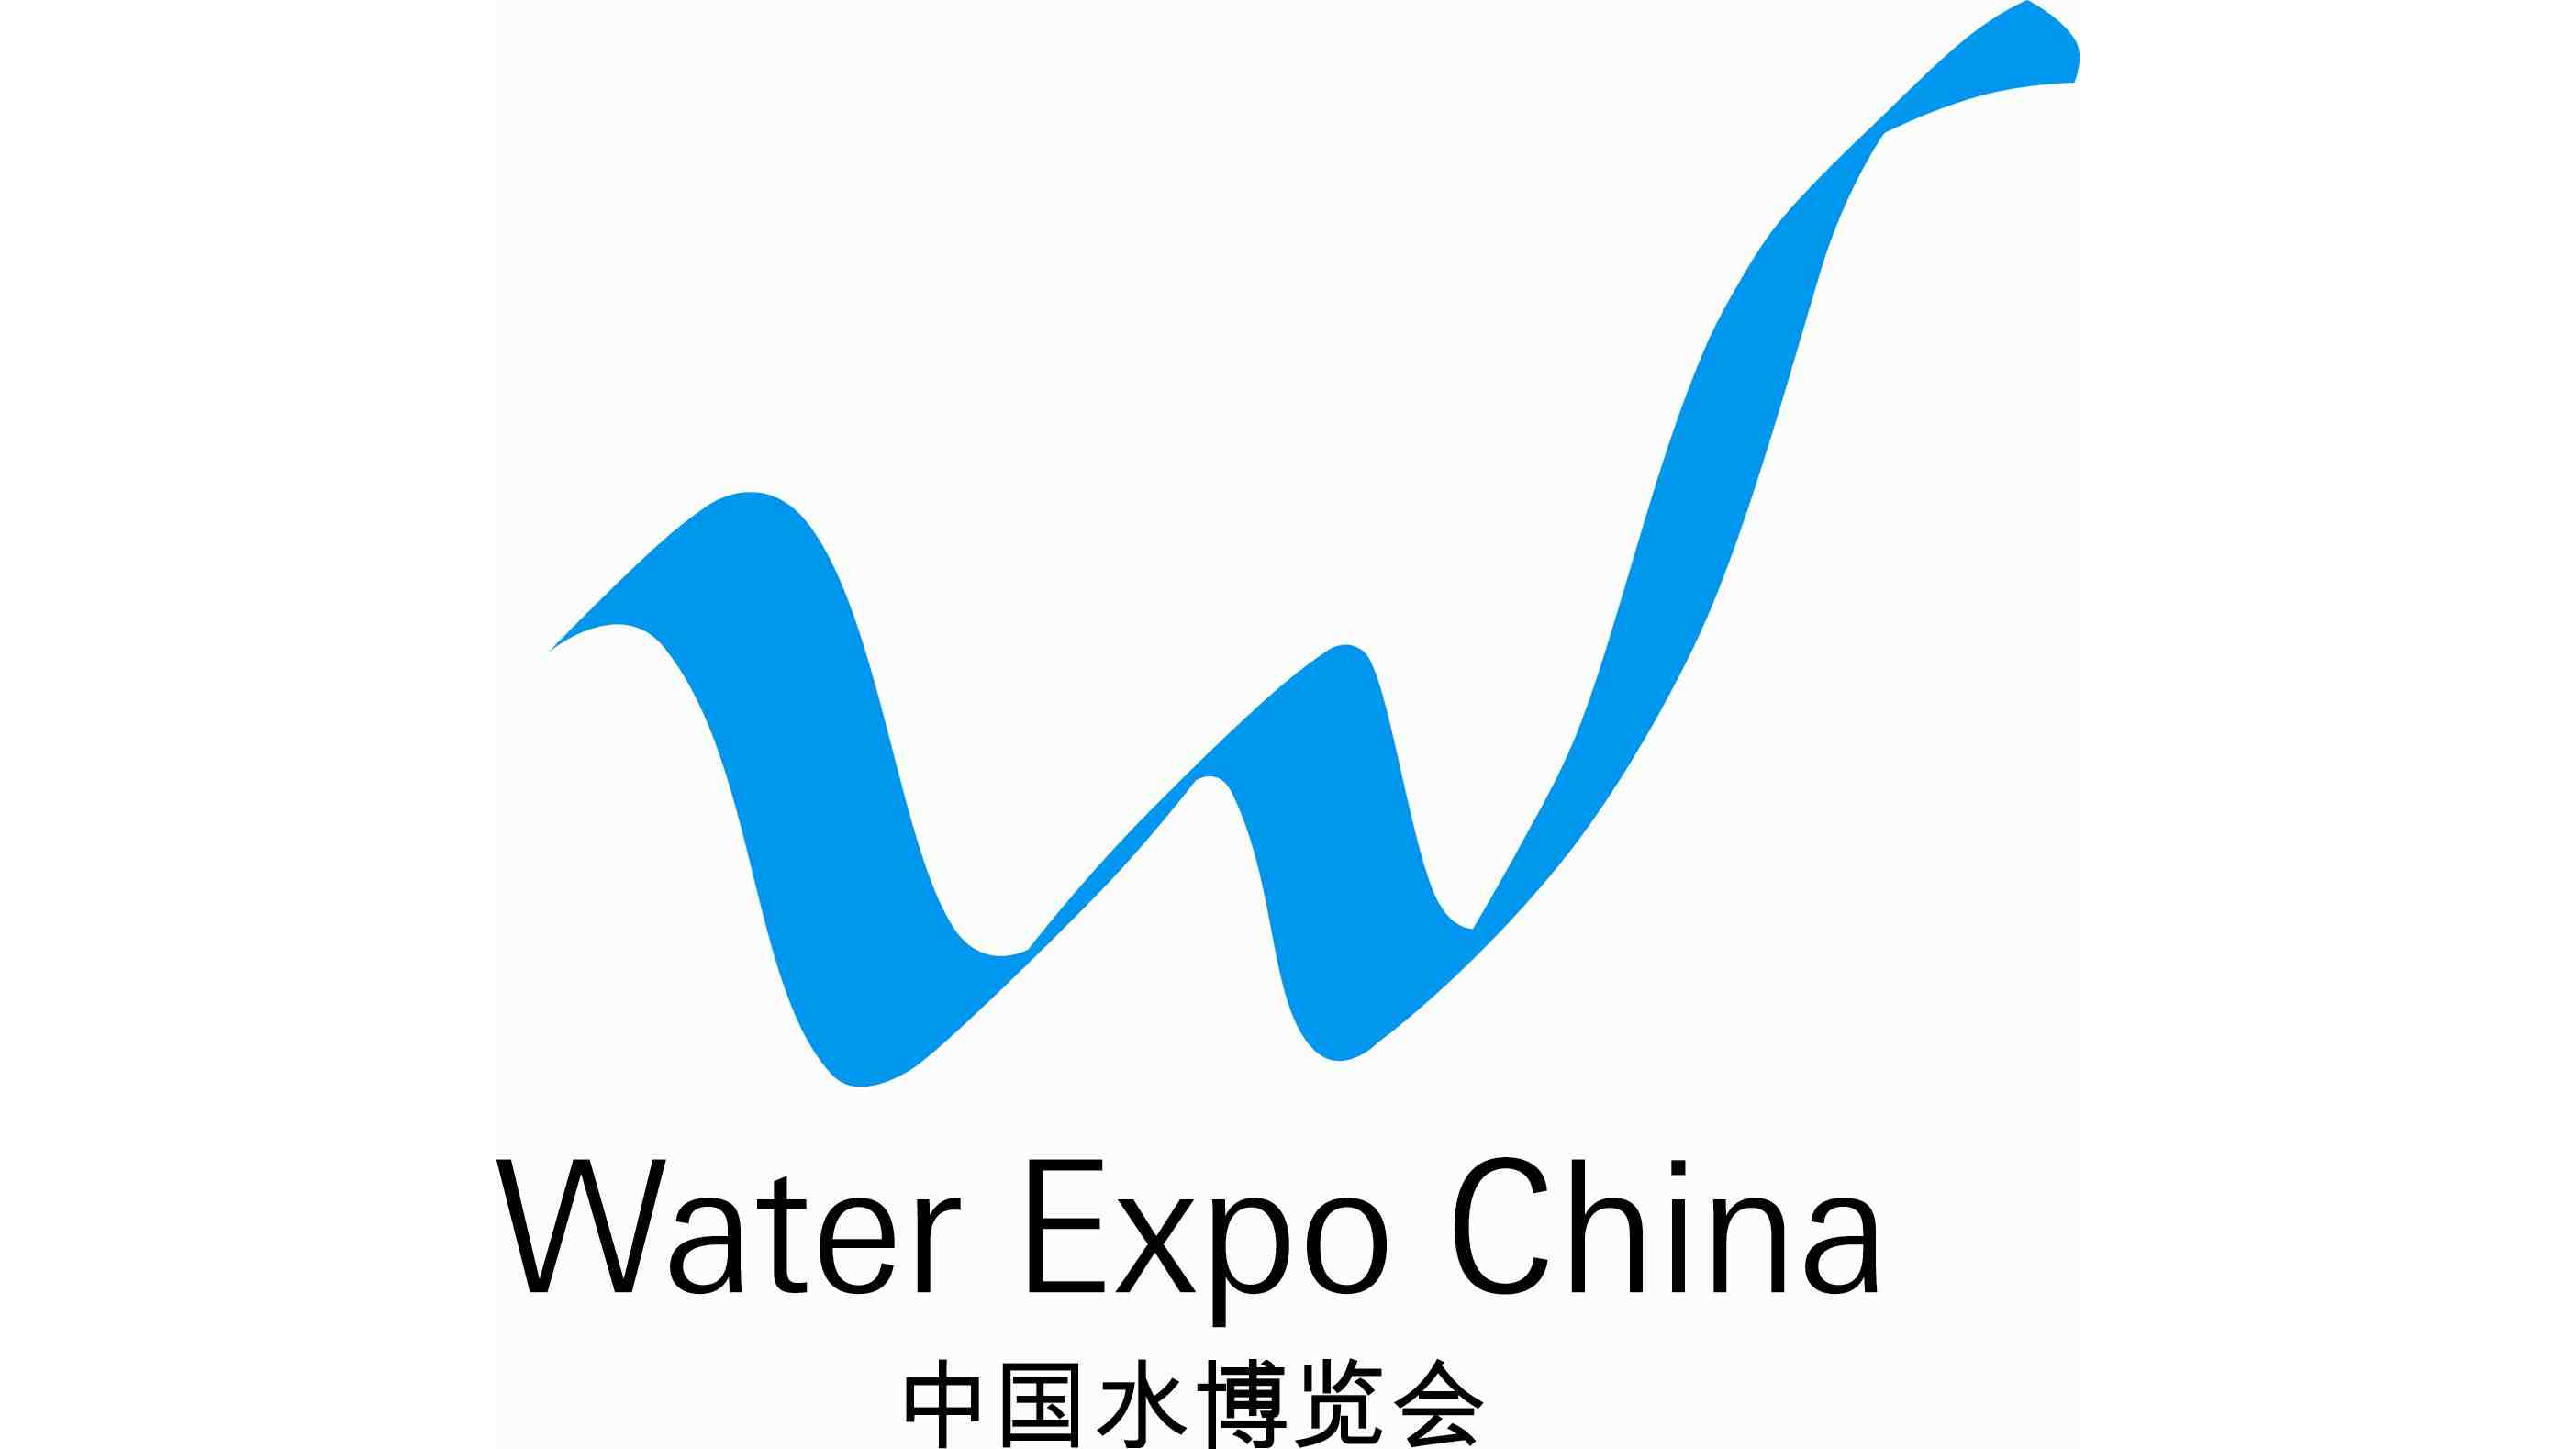 Water Expo China 2015